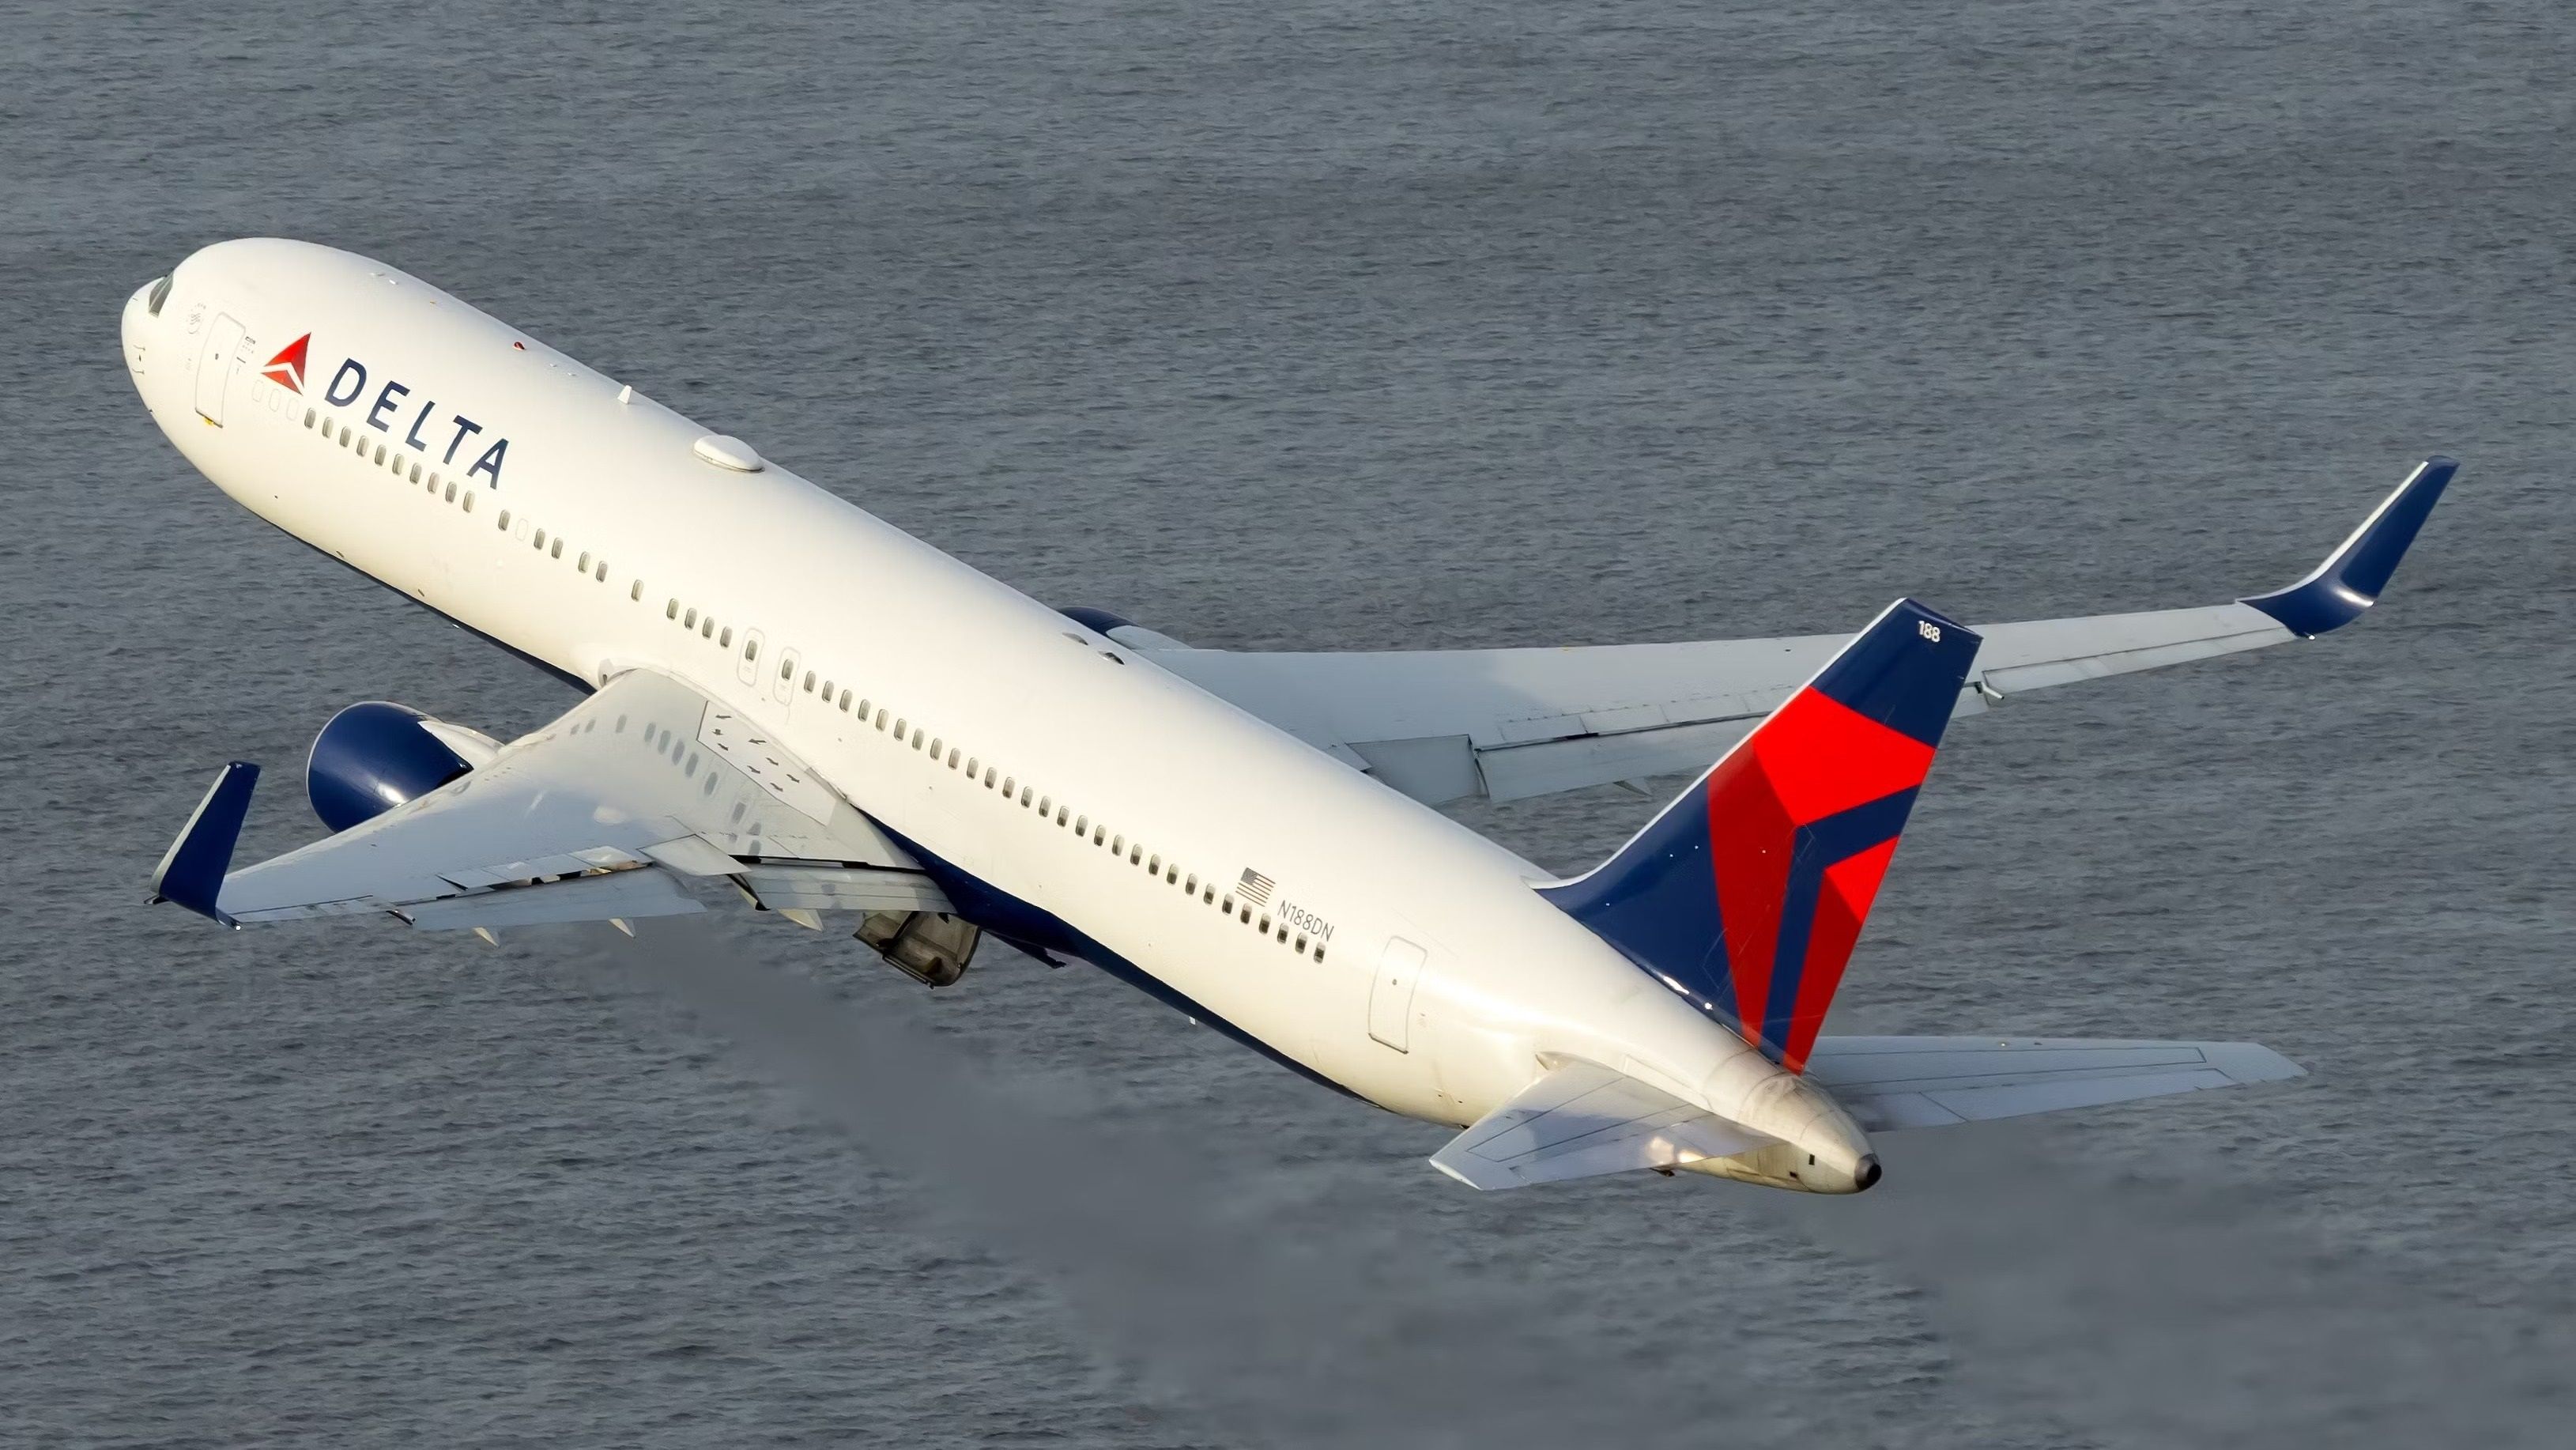 Delta Boeing 767-300ER taking off